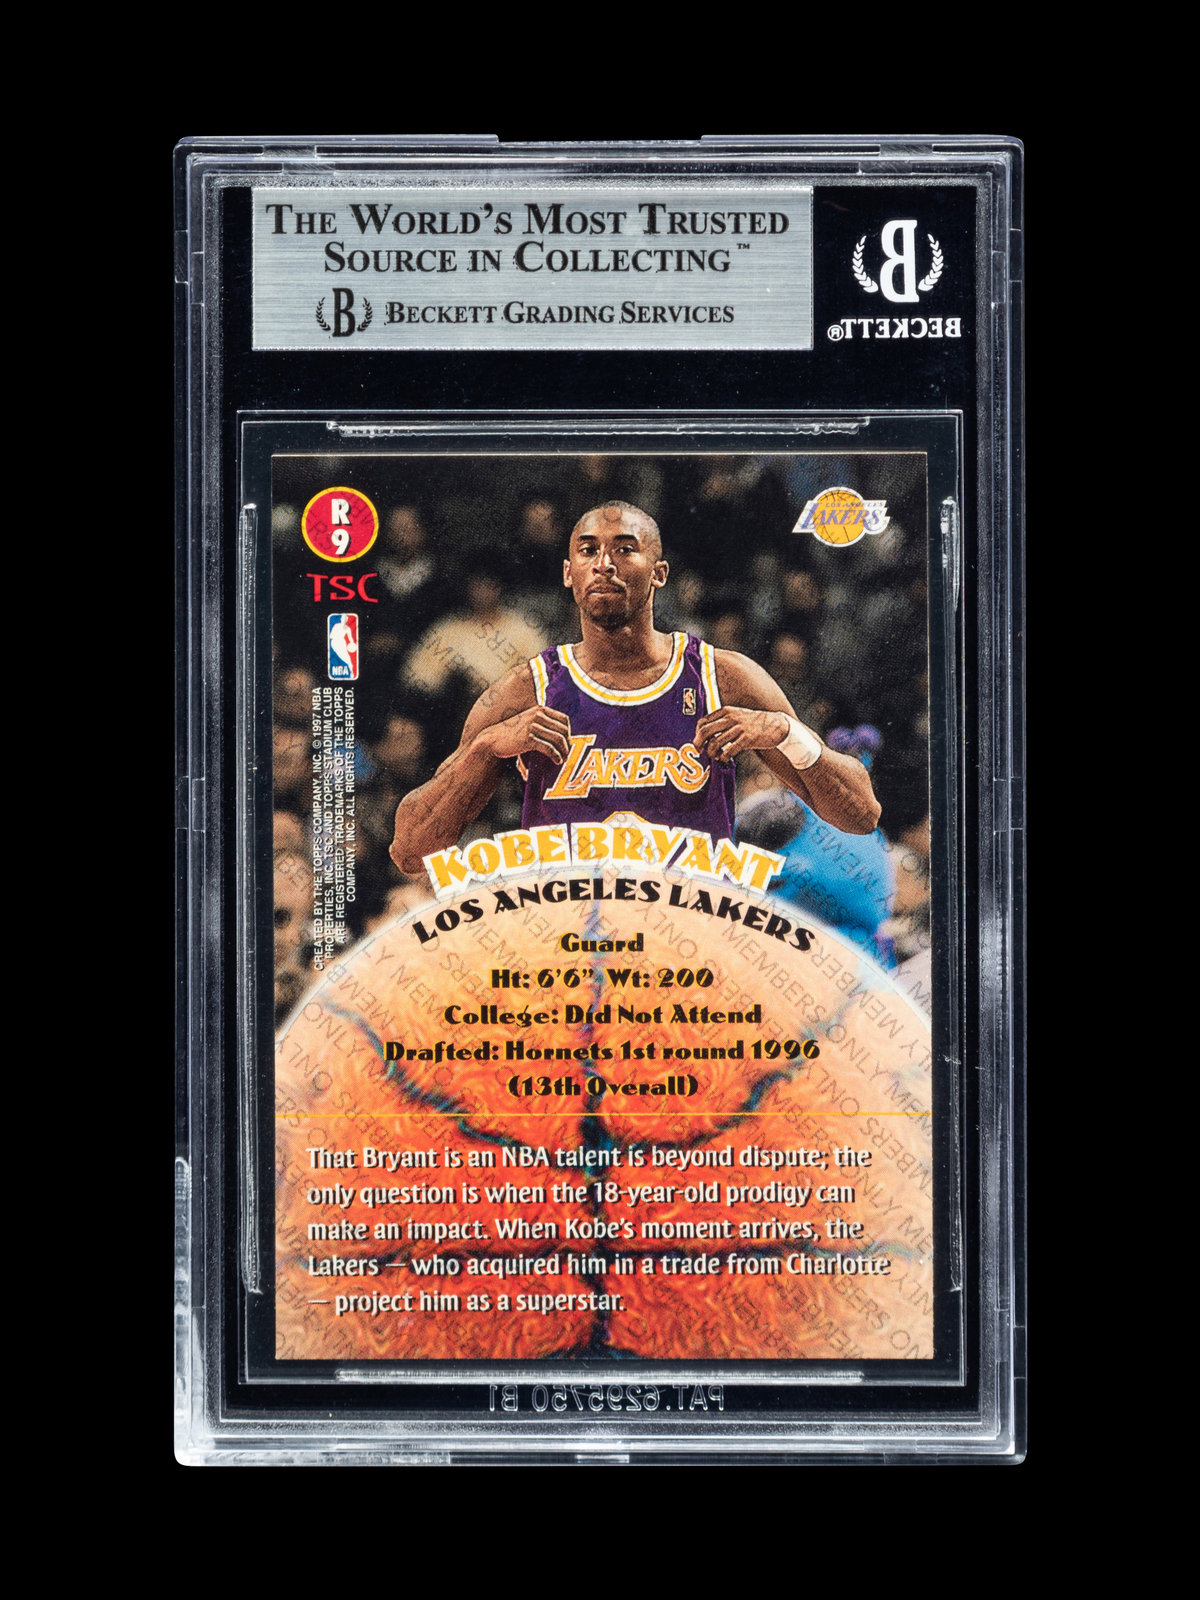 1996-97 Topps Stadium Club Rookies #R12 Kobe Bryant Basketball Card Lakers